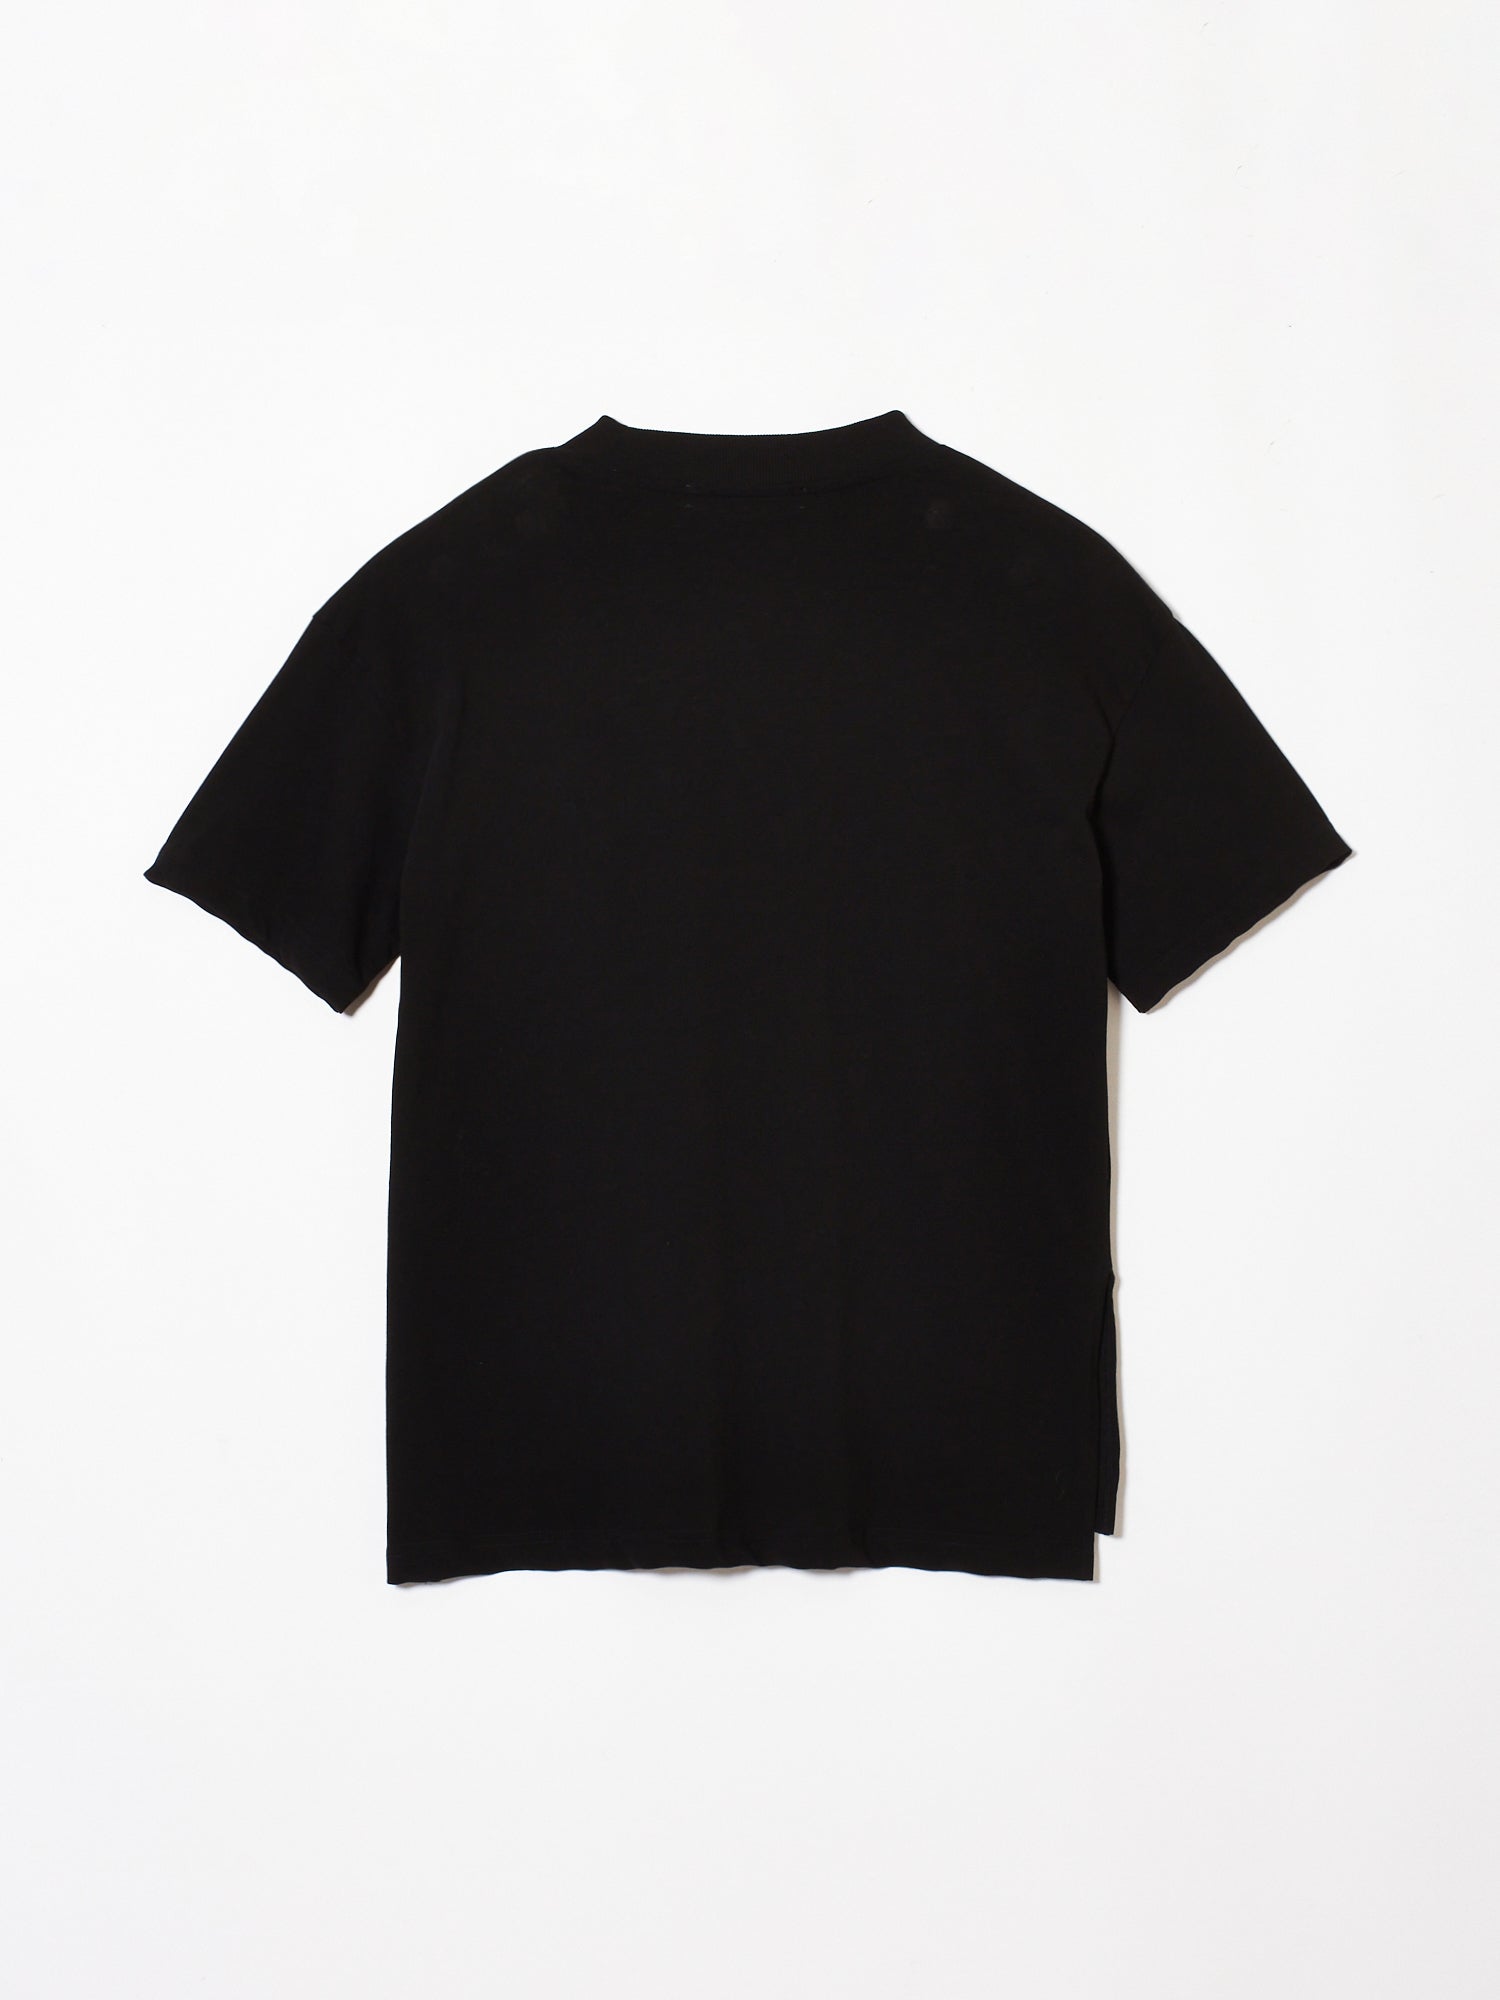 Pearl bra T-shirt【Delivery in May 2023】 – tanakadaisuke